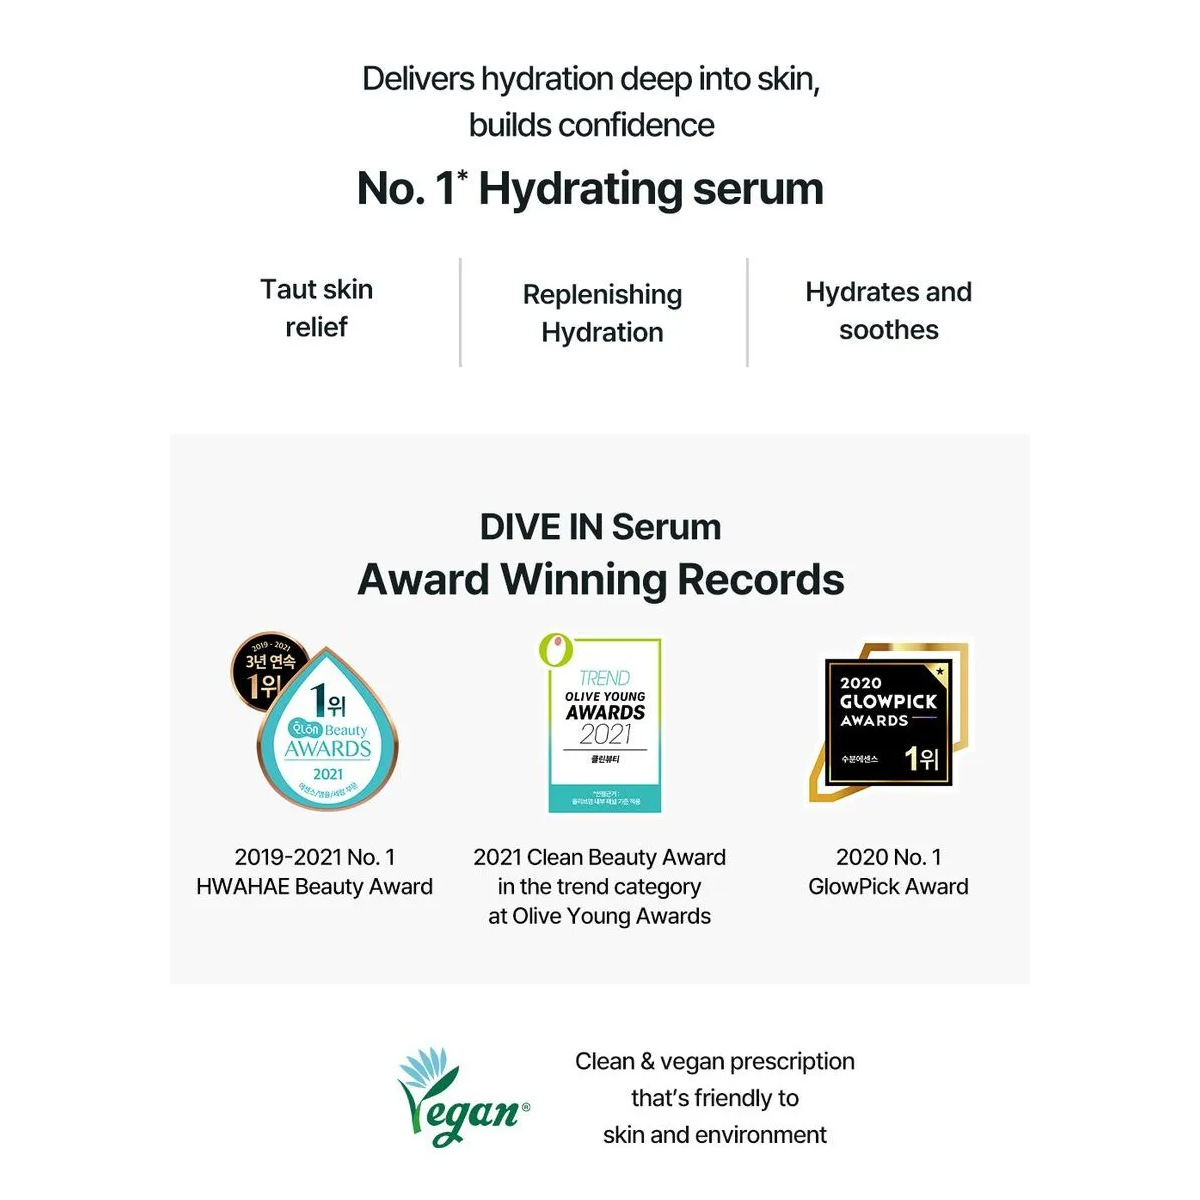 torriden - DIVE-IN Low Molecule Hyaluronic Acid serum | Hydrating Moisture Lightweight Korean Skincare Moisturizing torriden serum